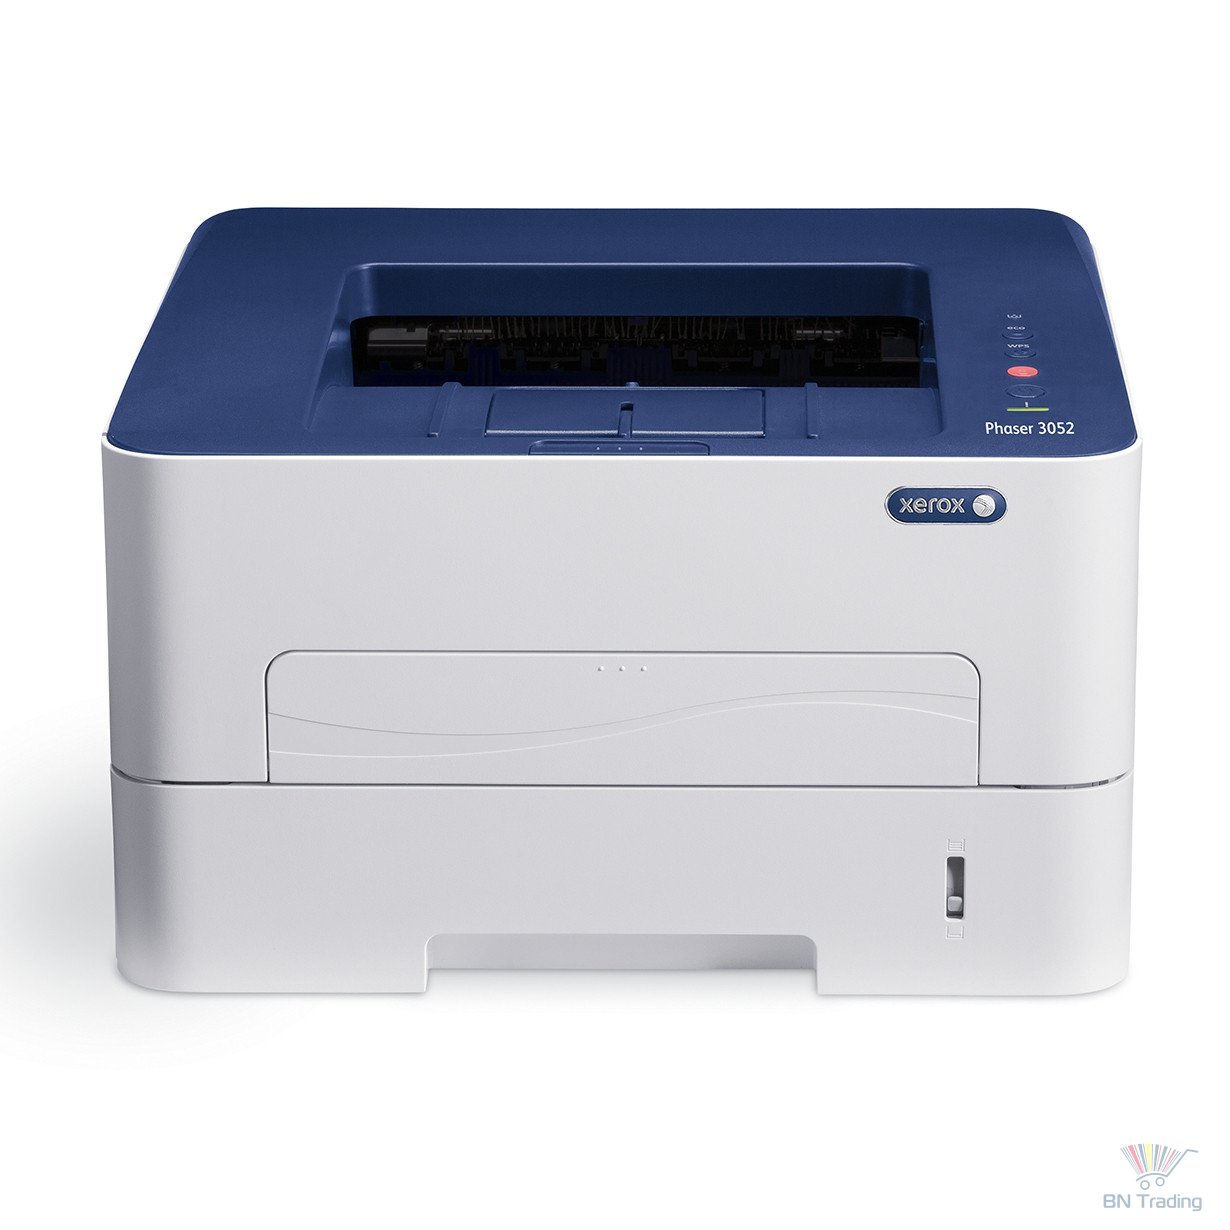 Купить принтер xerox phaser 3020. Xerox Phaser 3020. Принтер Xerox Phaser 3052v_ni. Принтер Xerox Phaser 3020v_bi. Принтер Xerox b210v_dni.